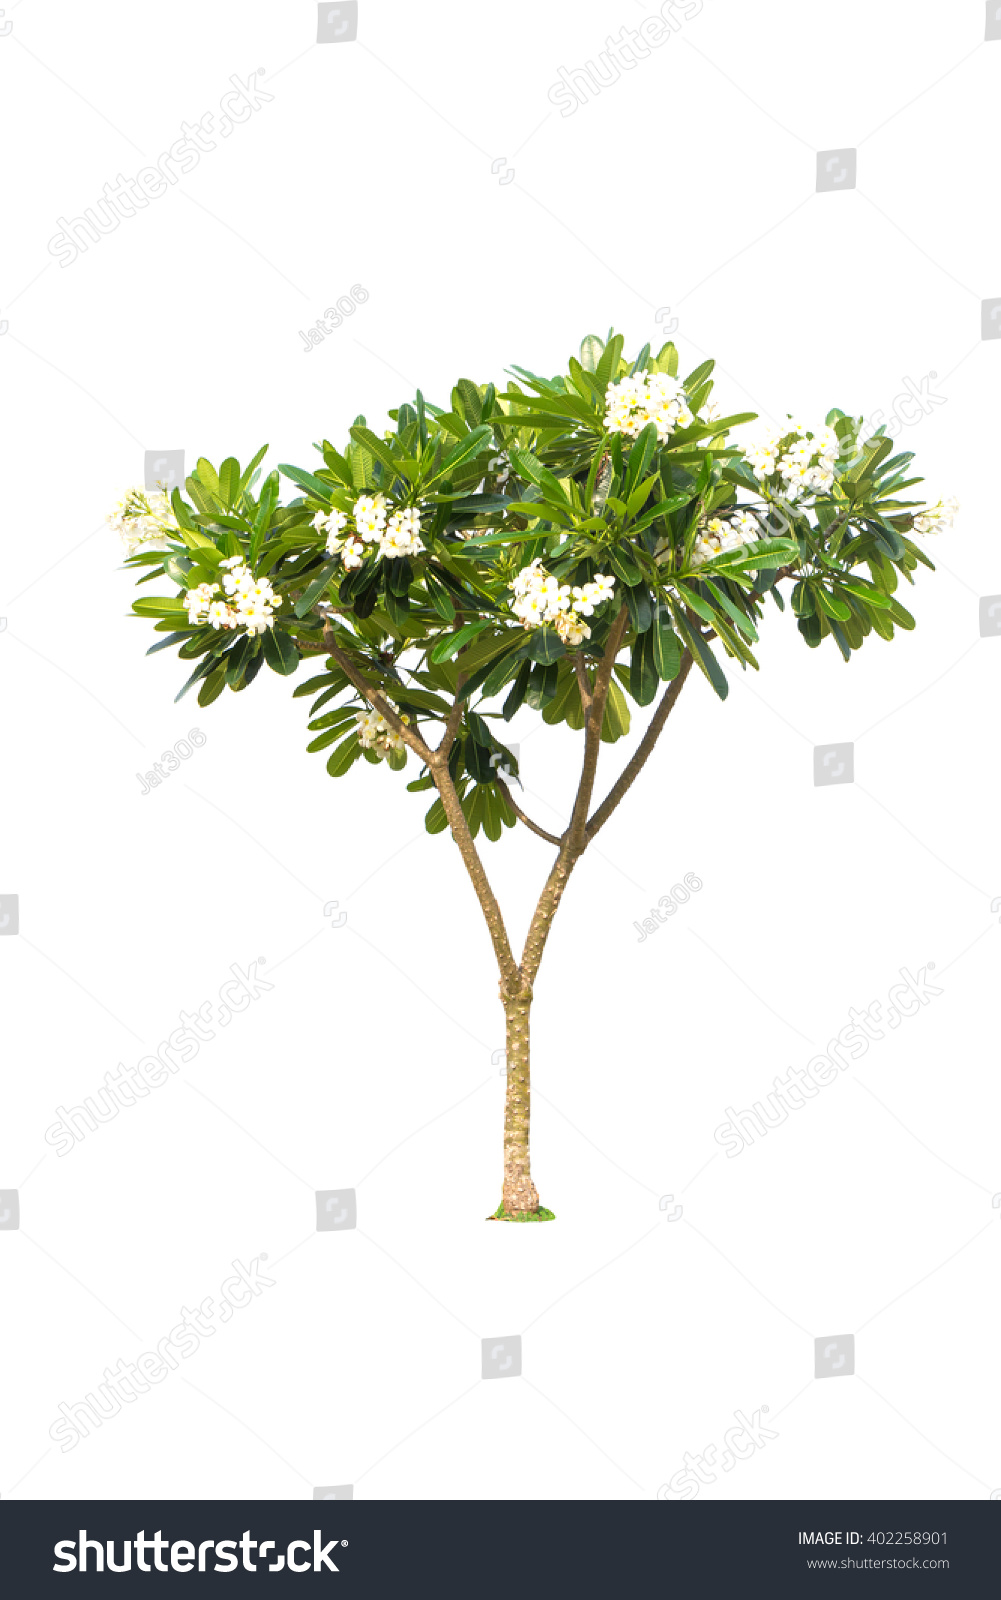 Plumeria Tree Isolated On White Background Stock Photo 402258901